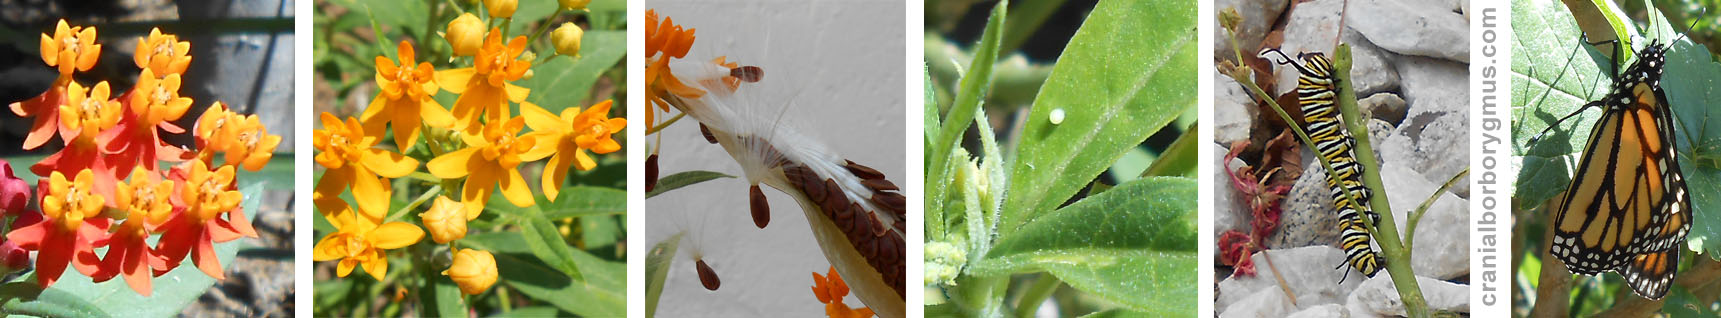 the challenges of growing milkweed for monarch caterpillars in santa barbara